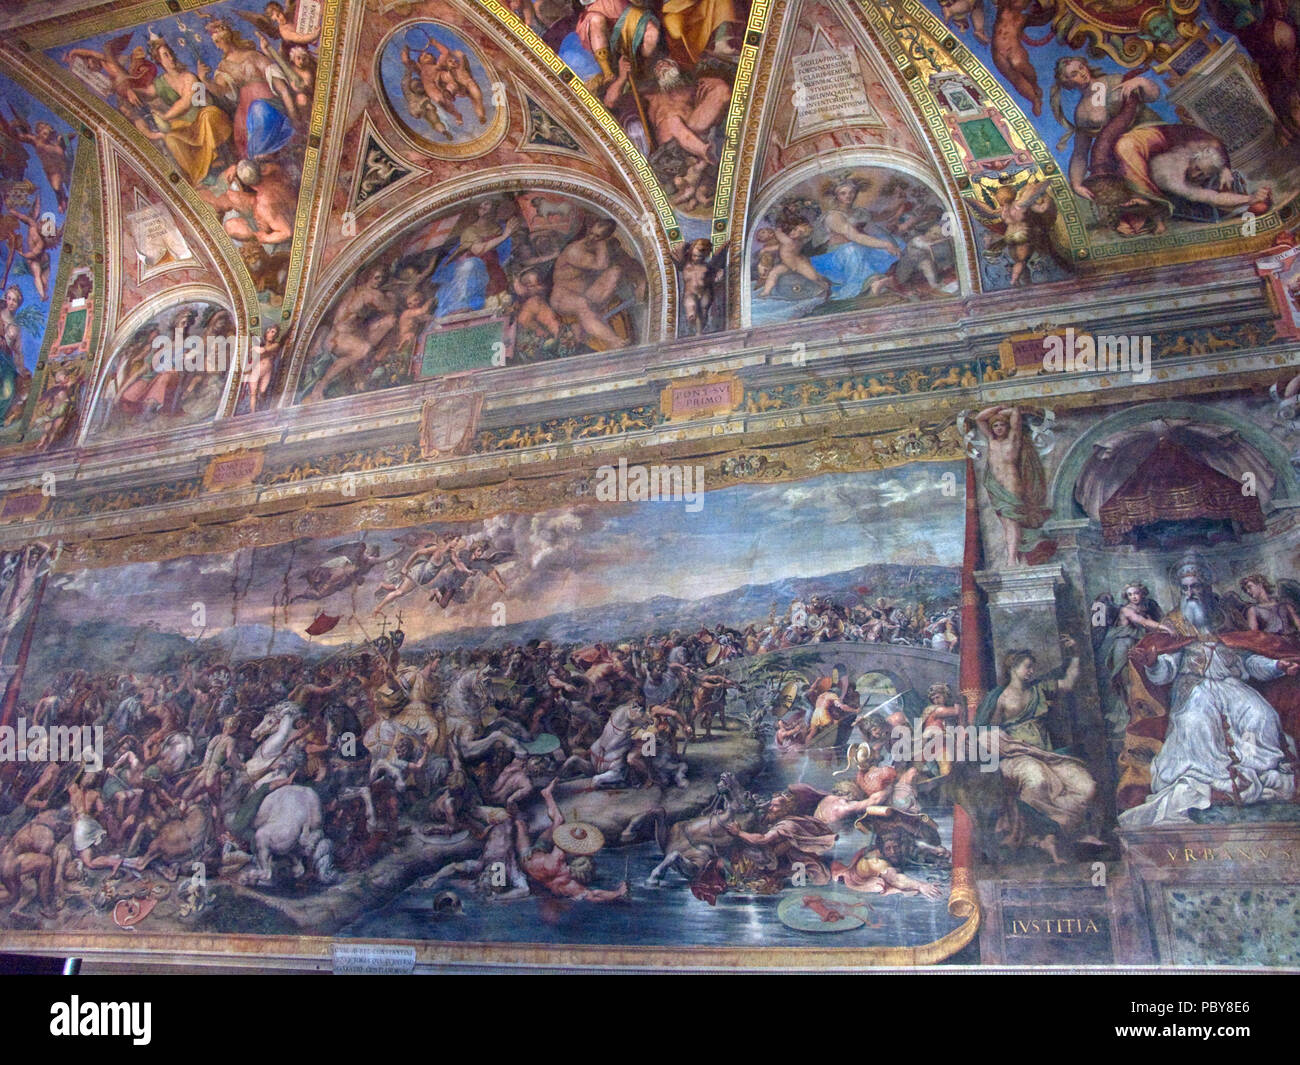 KONICA MINOLTA DIGITAL CAMERA 627 Vatican-Apostolic Palace-Battle of Milvian Bridge Stock Photo